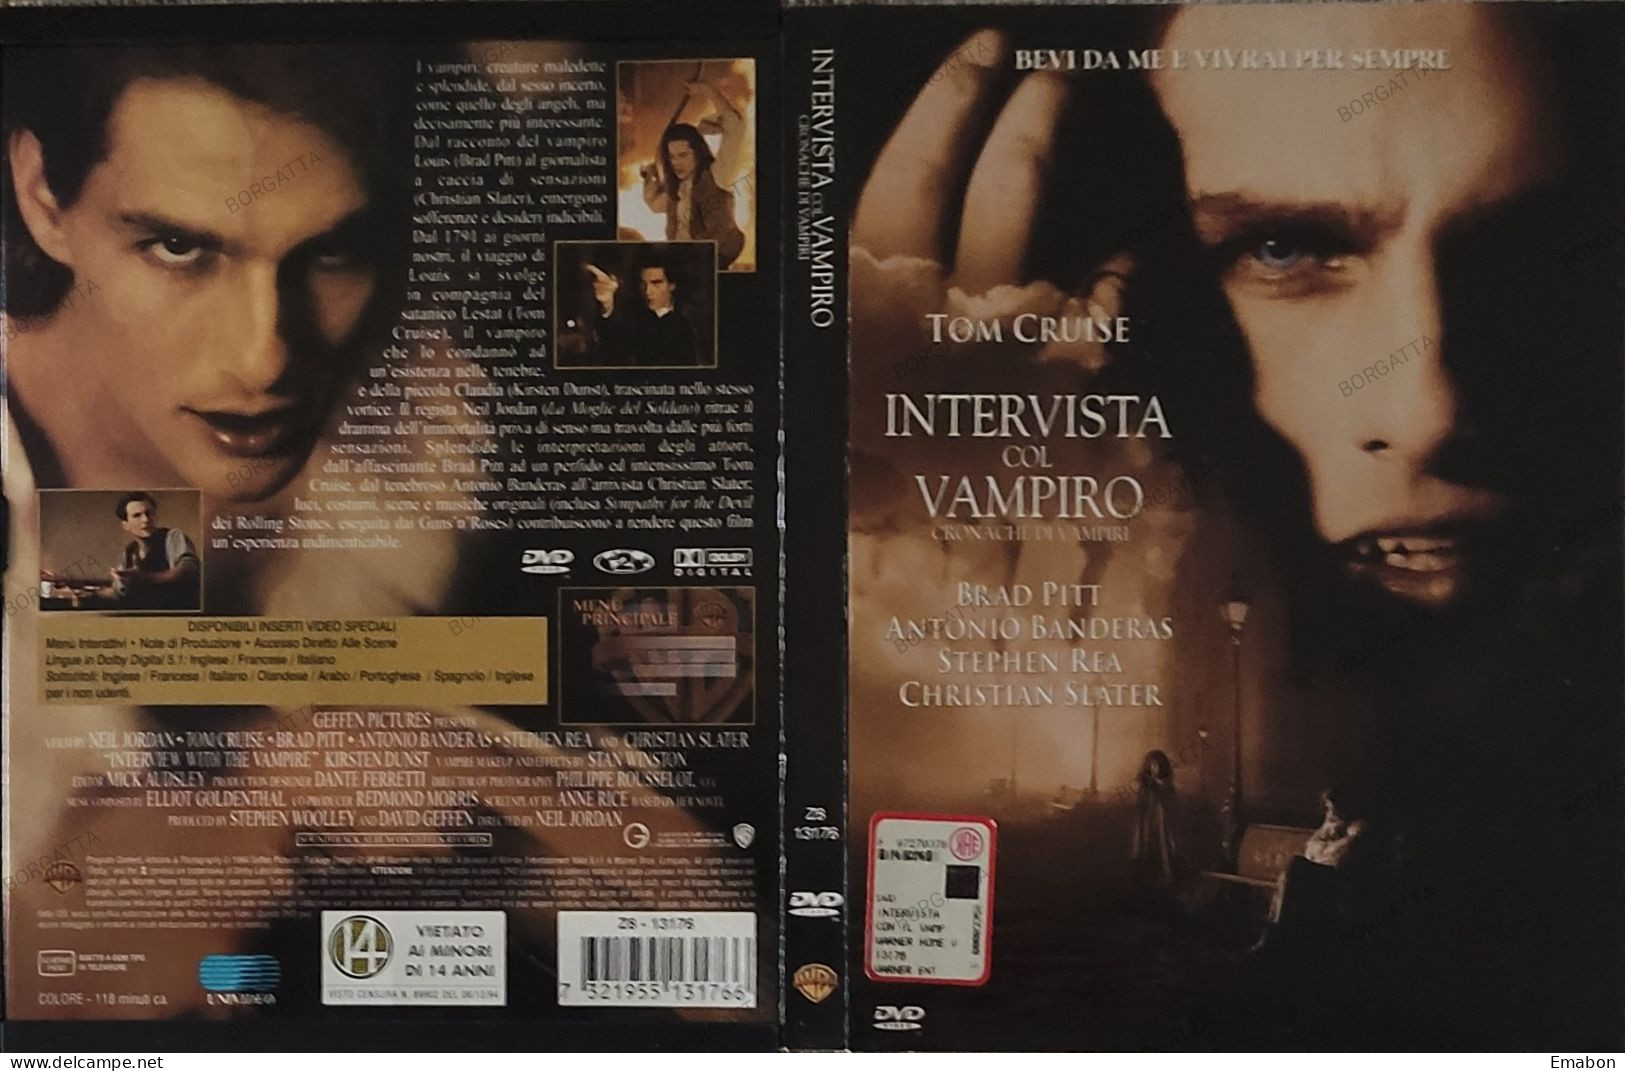 BORGATTA - HORROR - Dvd " INTERVISTA COL VAMPIRO "-PITT, BANDERAS, SLATER - PAL 2 - WARNER 1998 -  USATO In Buono Stato - Horreur